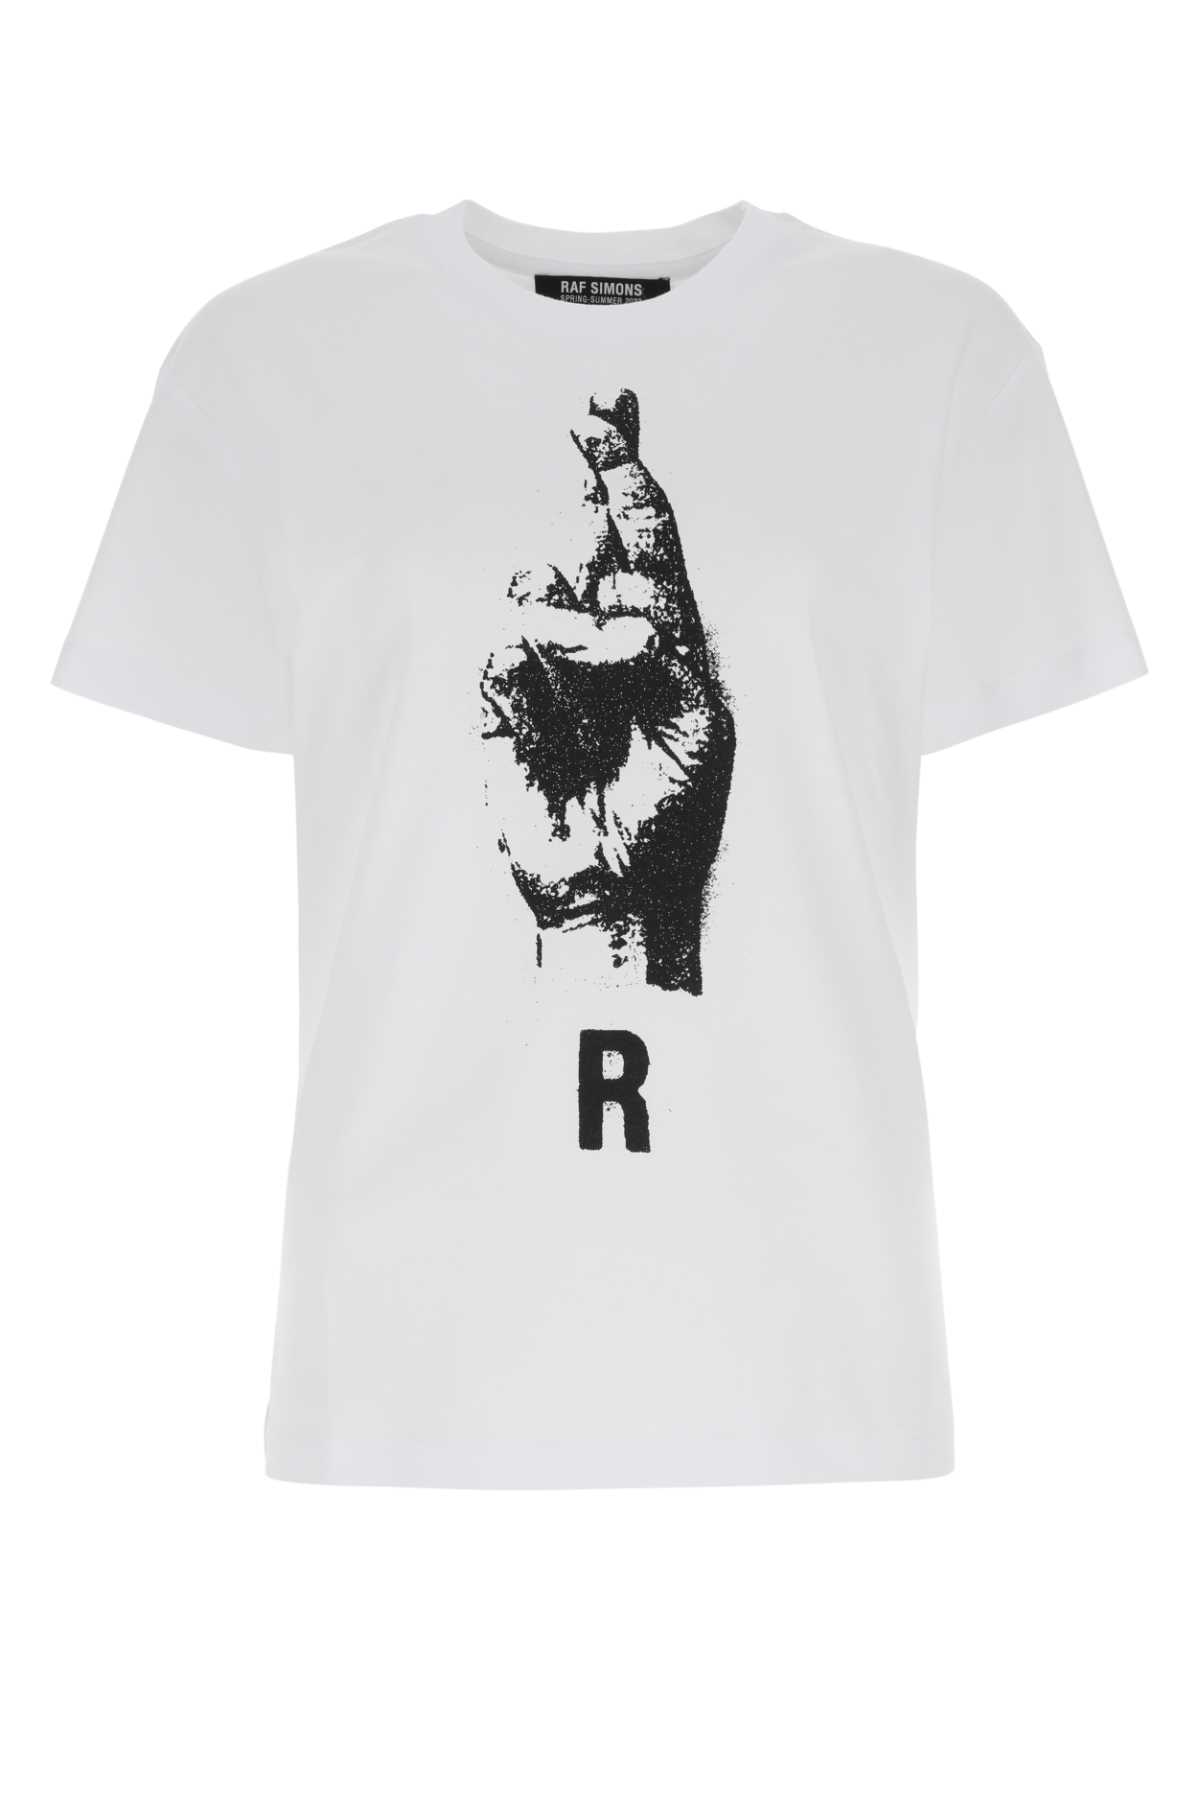 Raf Simons White Cotton T-shirt